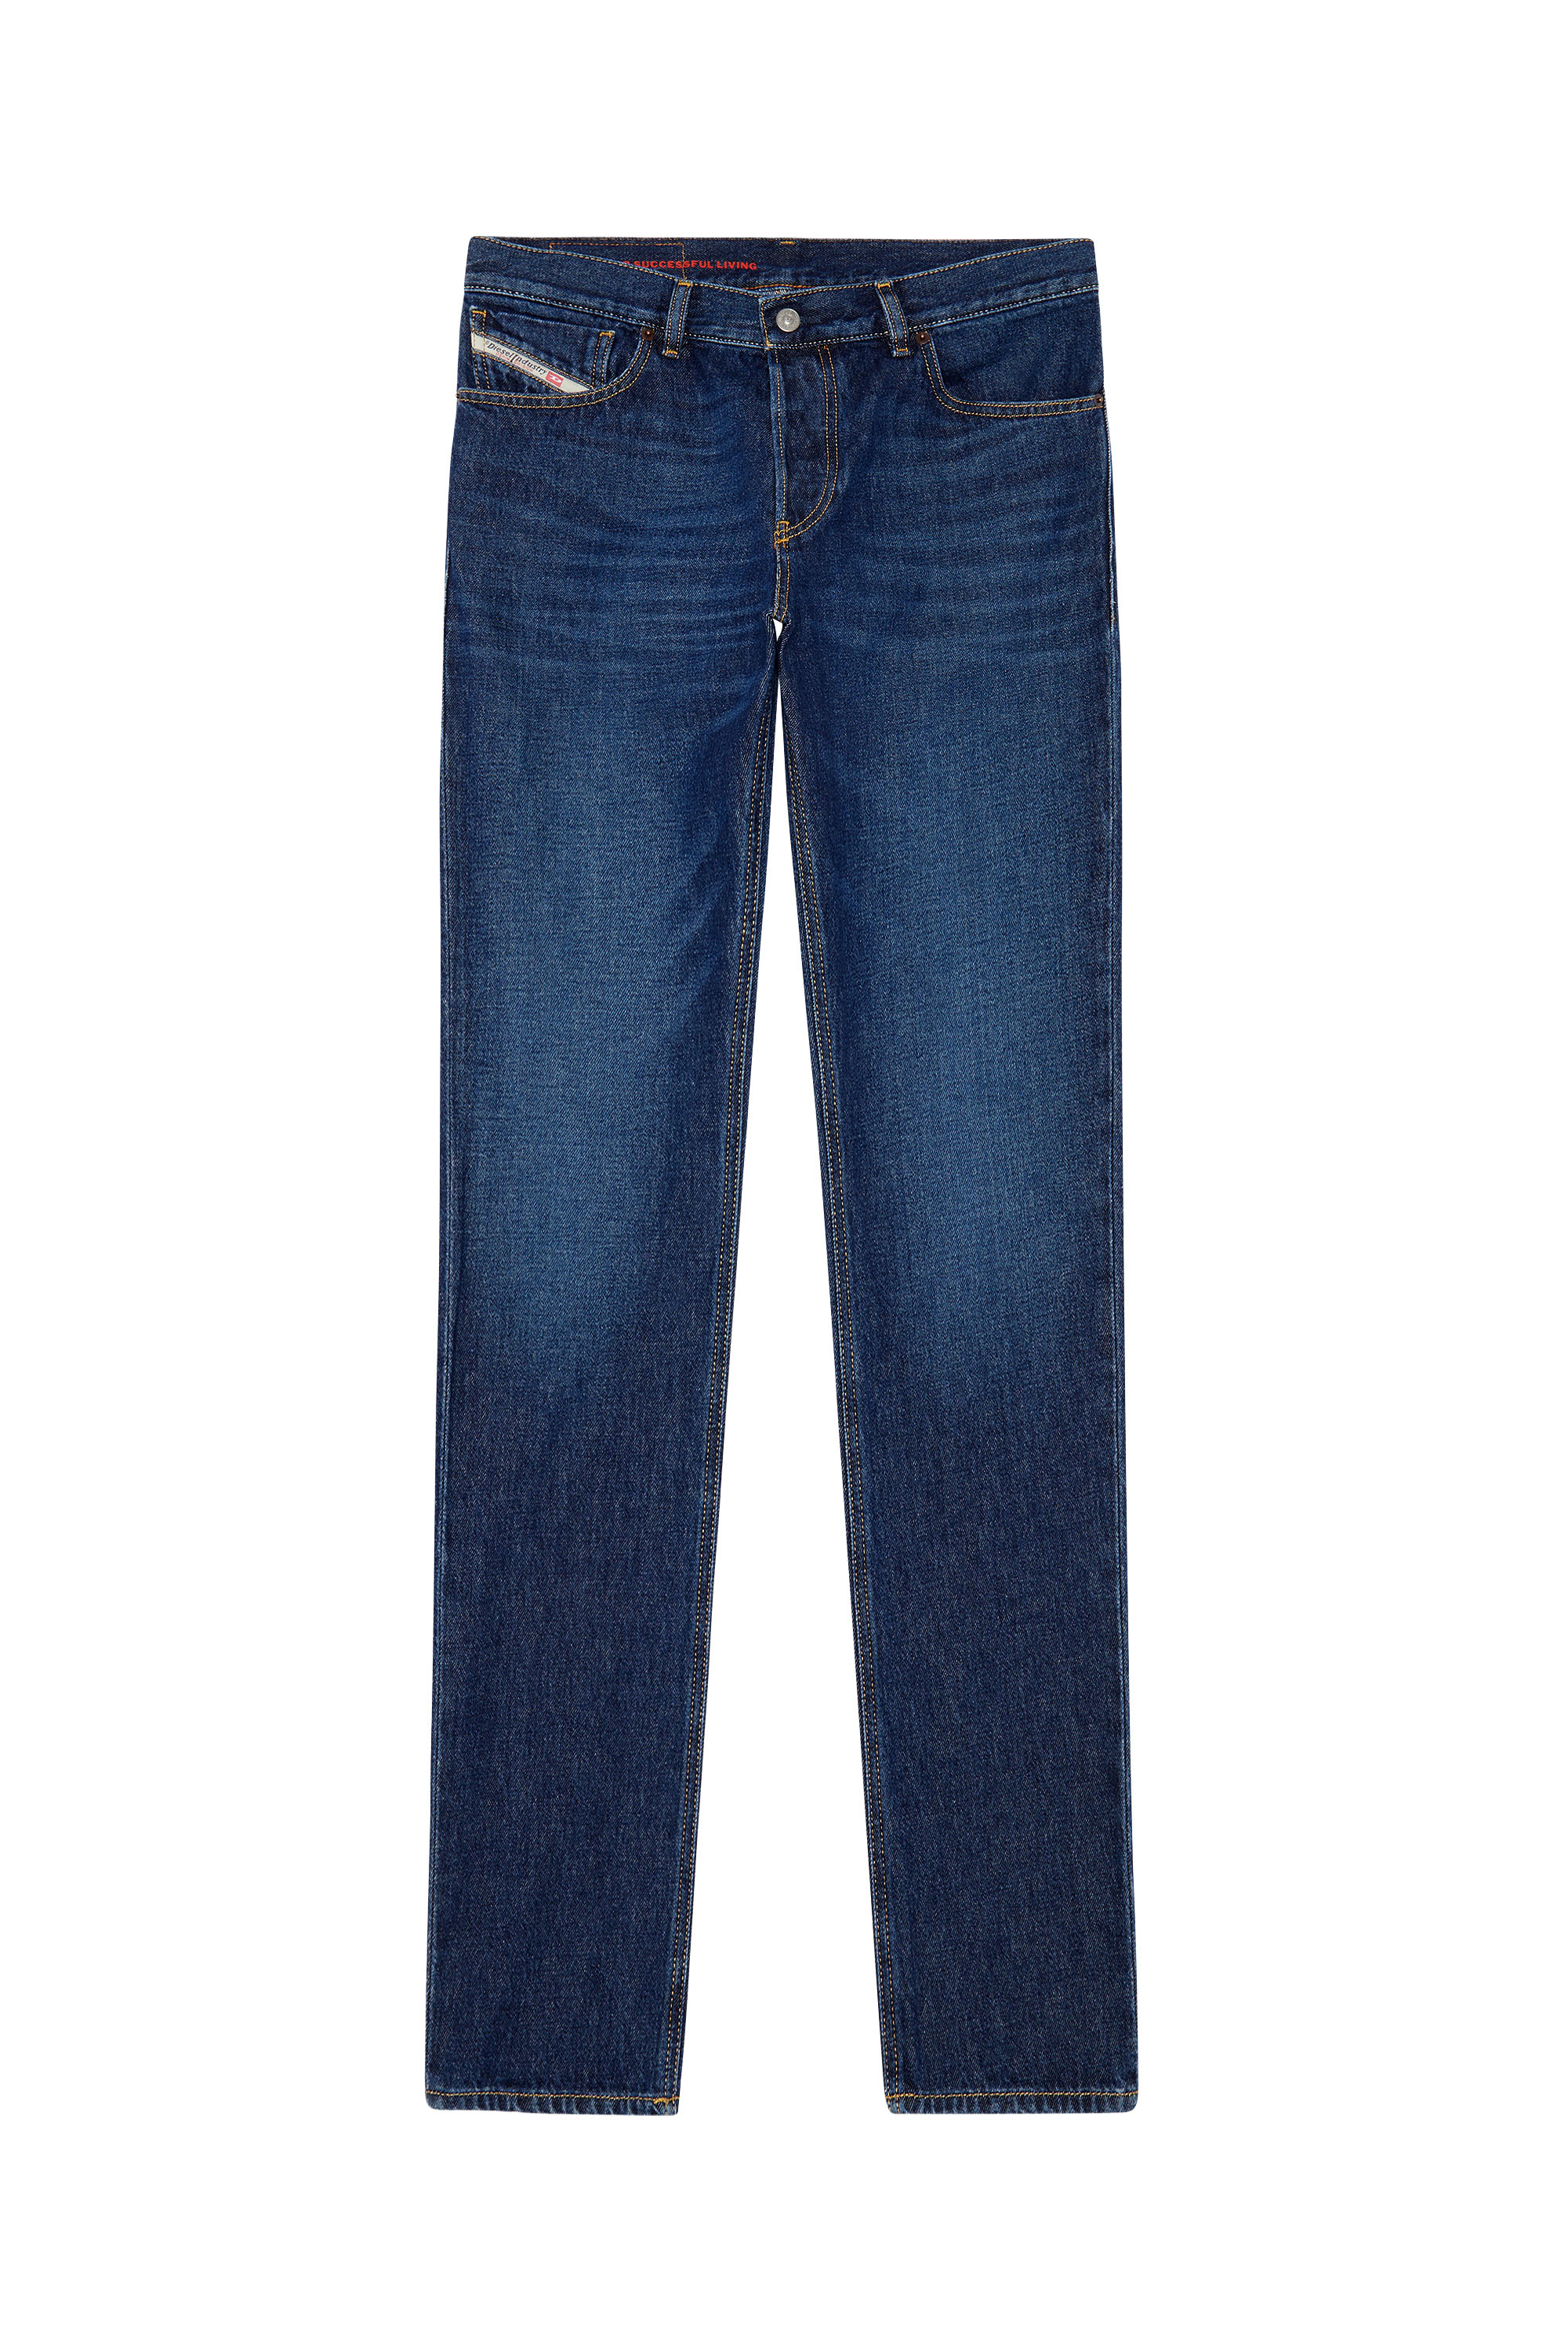 1995 09C03 Straight Jeans, Dunkelblau - Jeans